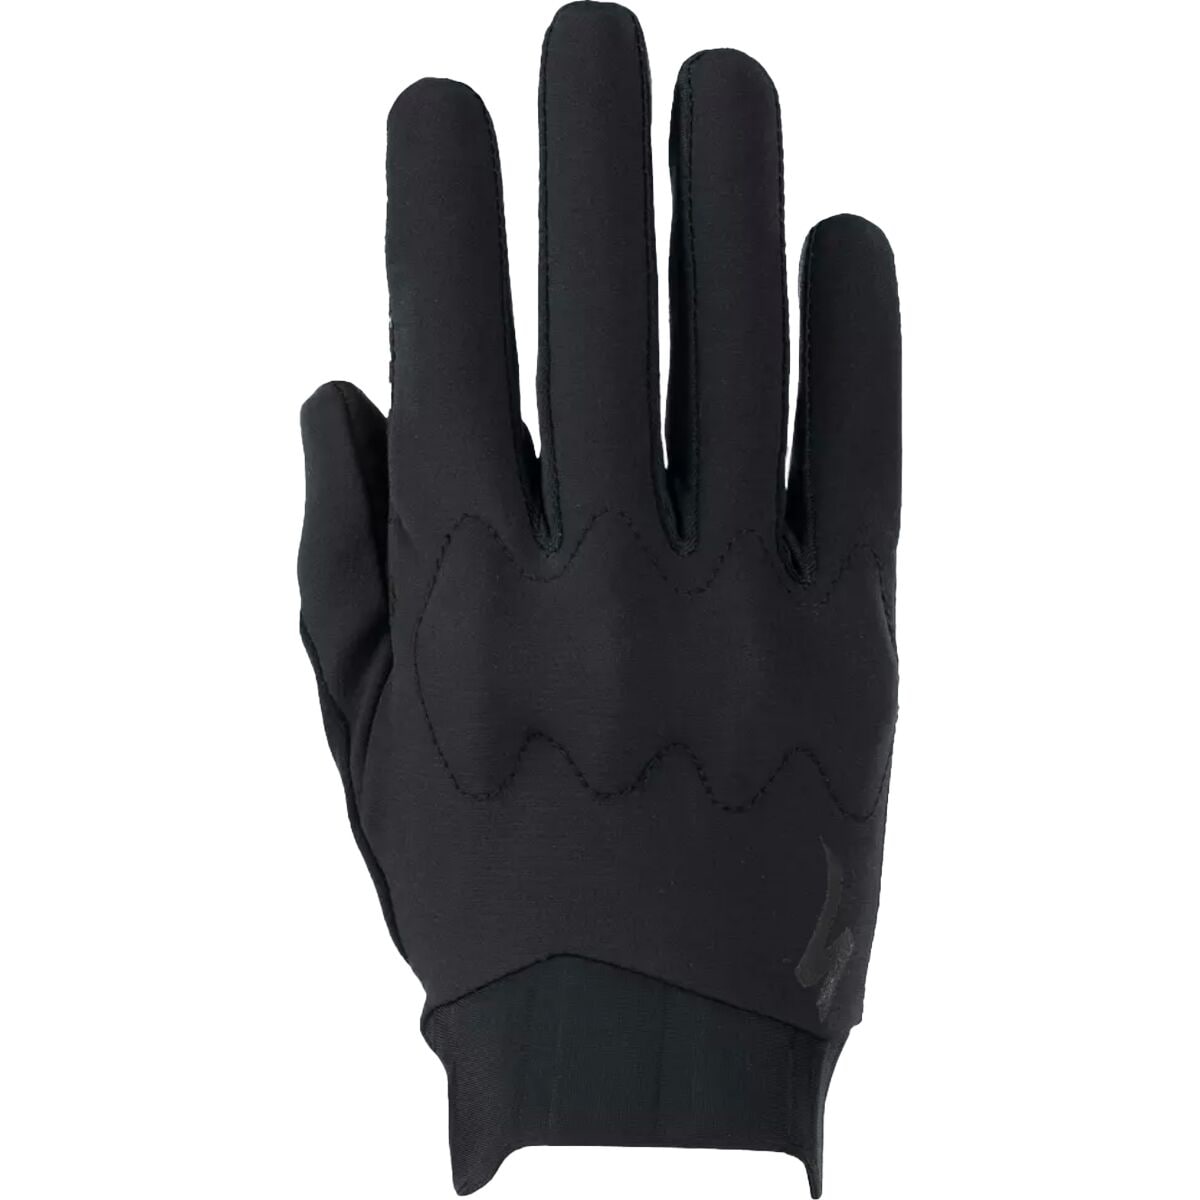 Specialized Trail D3O Long Finger Glove - Women's